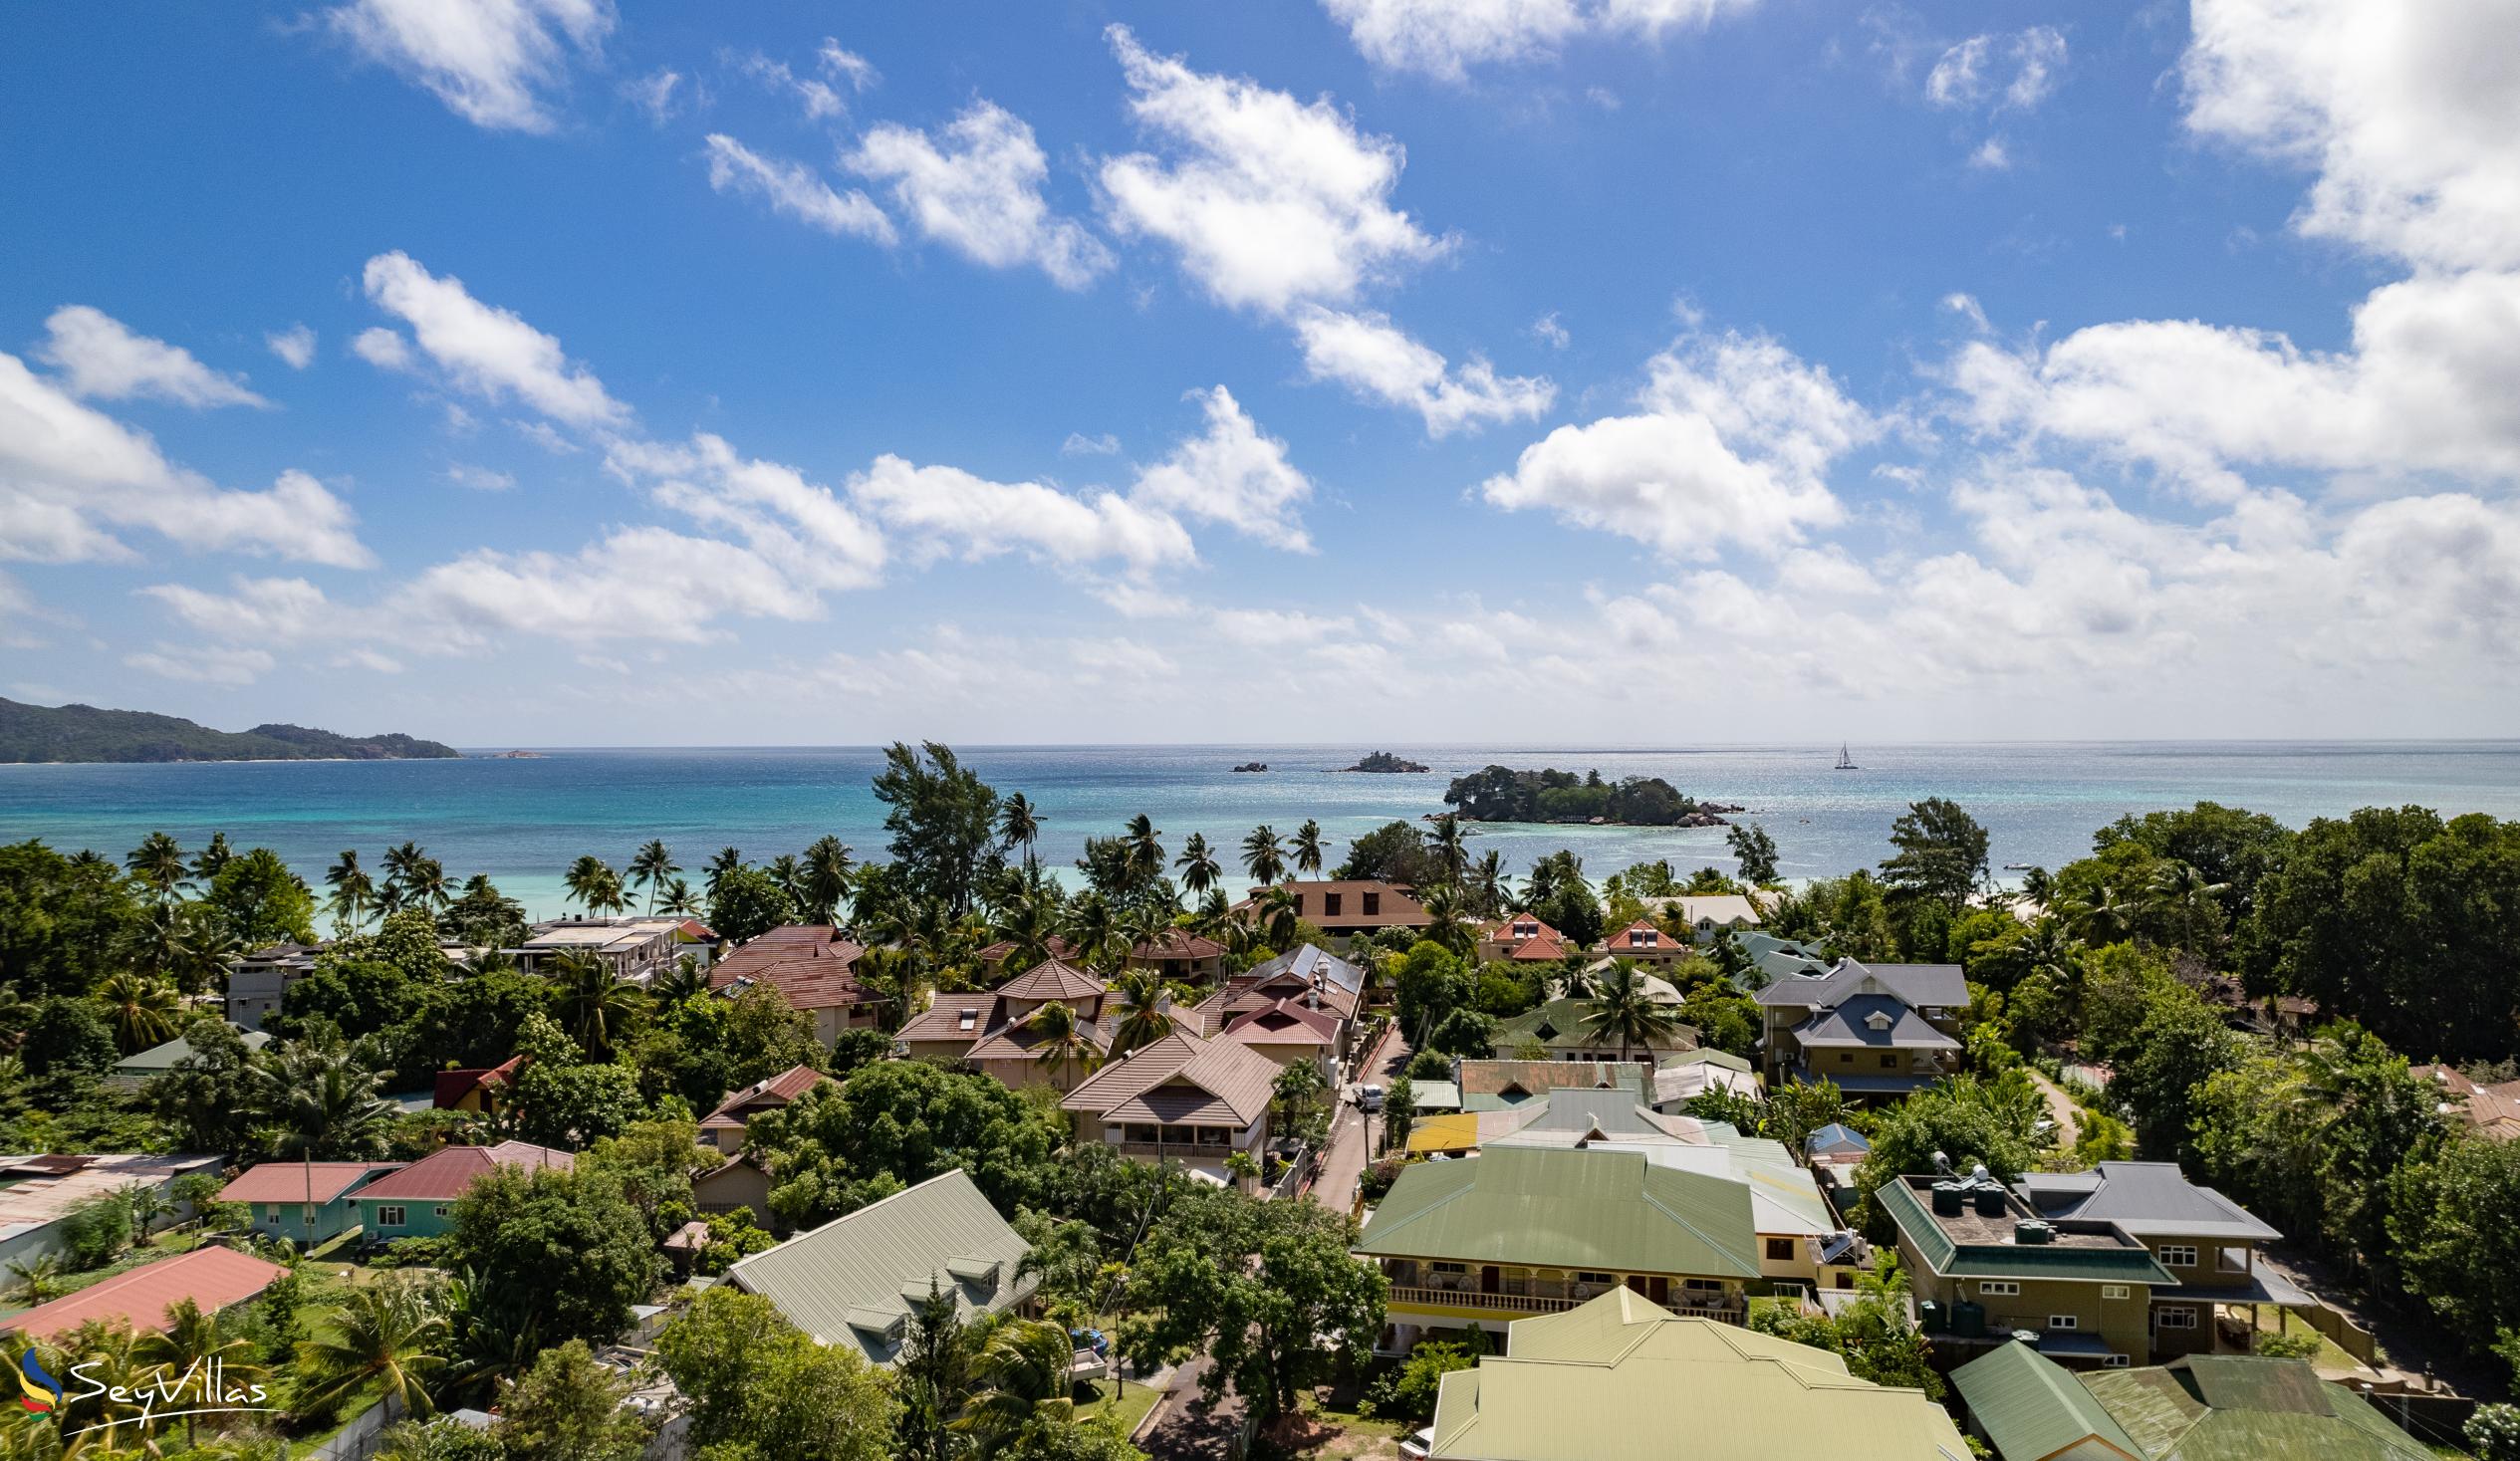 Foto 11: Myra's Self Catering Apartment - Location - Praslin (Seychelles)